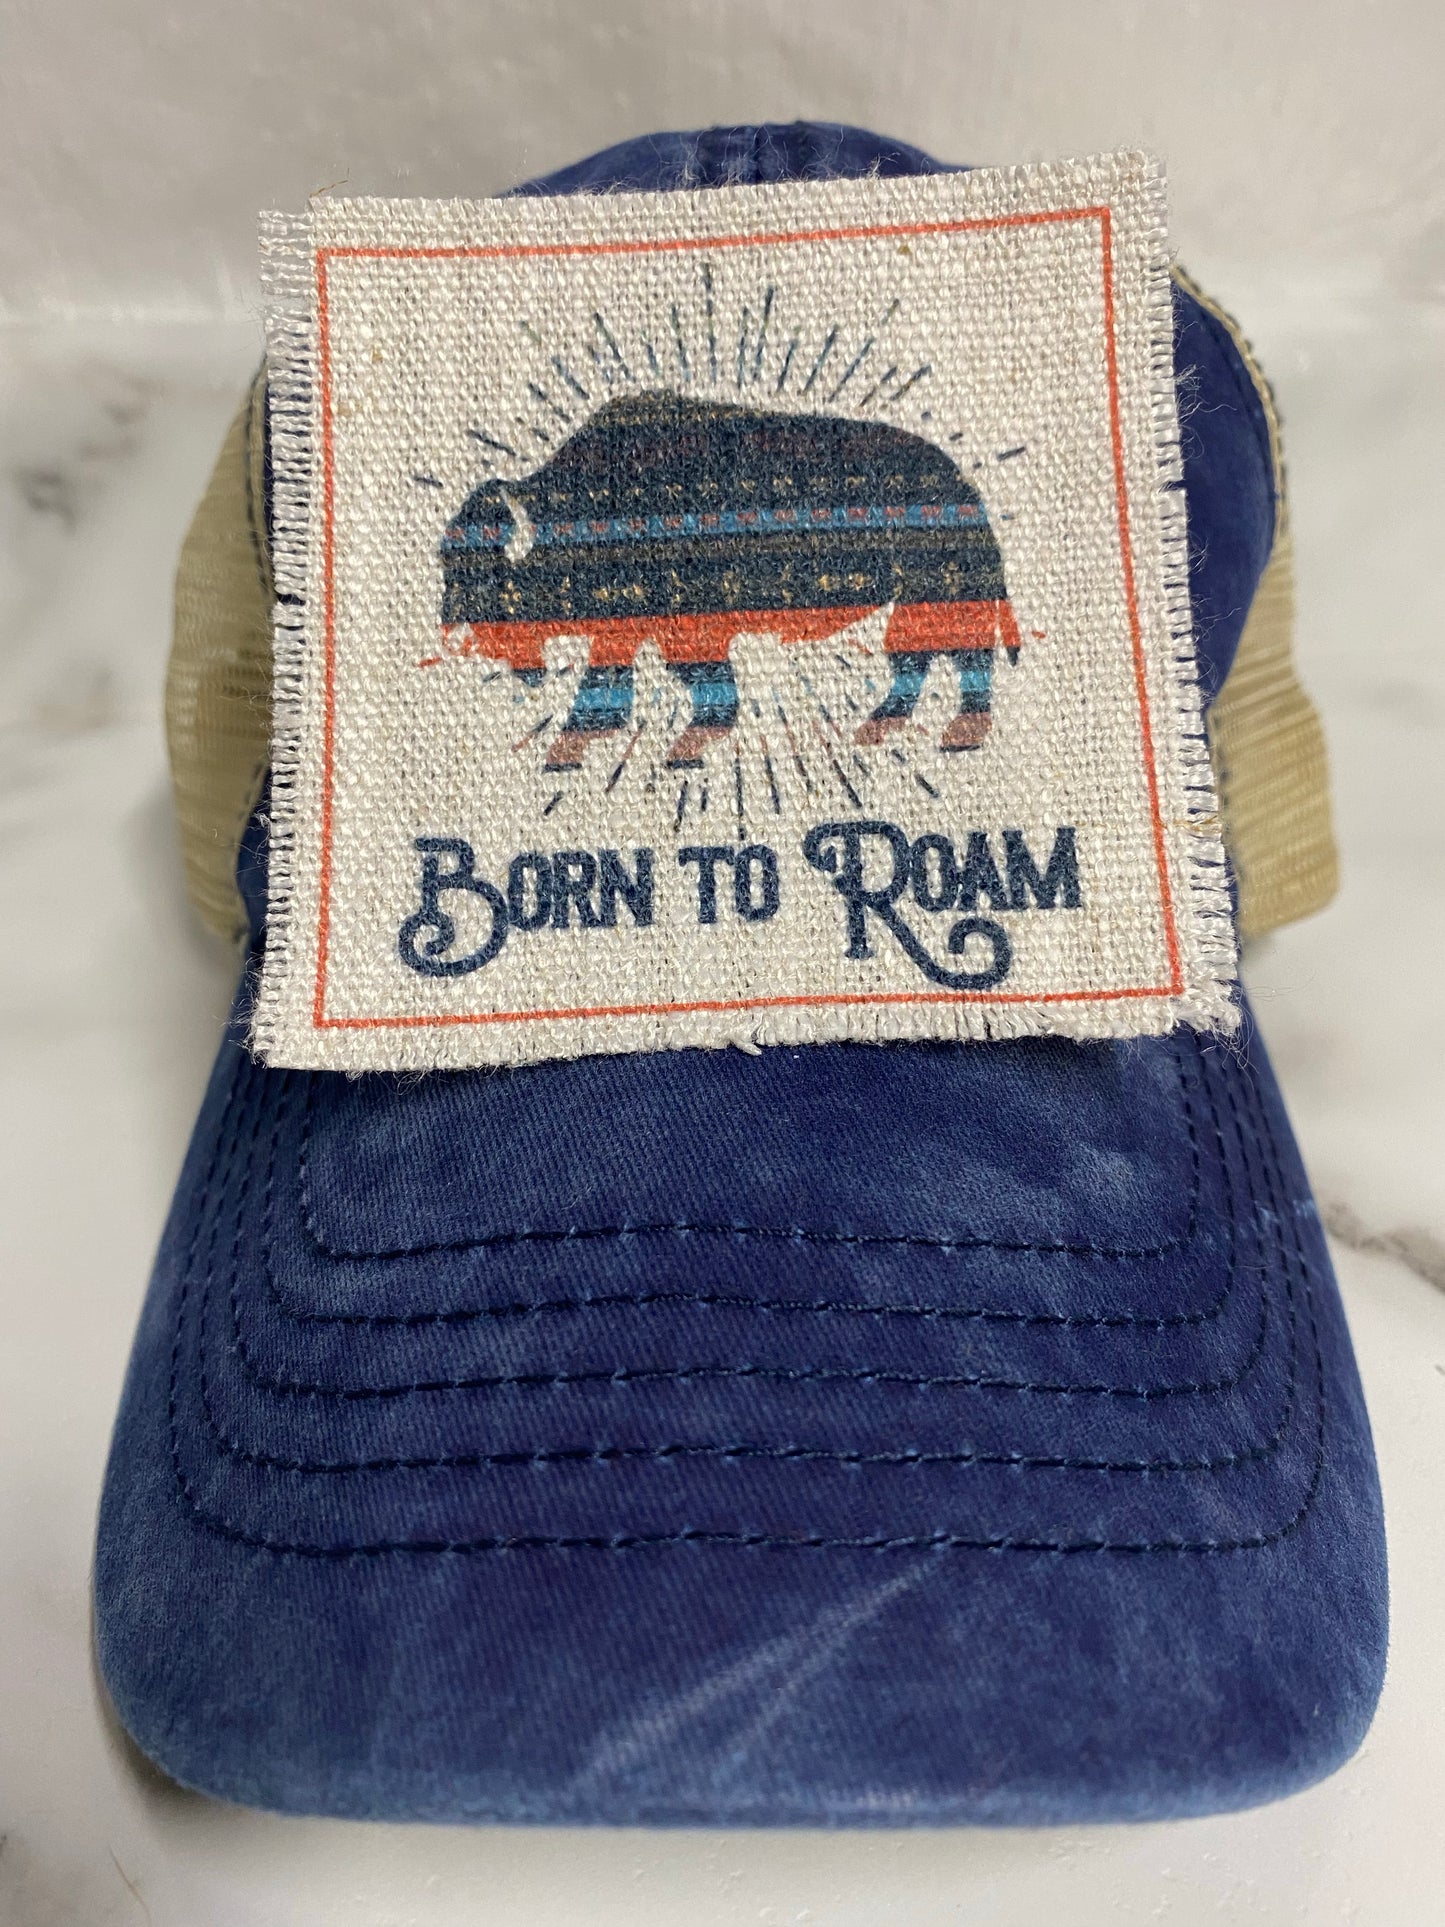 Born to Roam Hat Patch